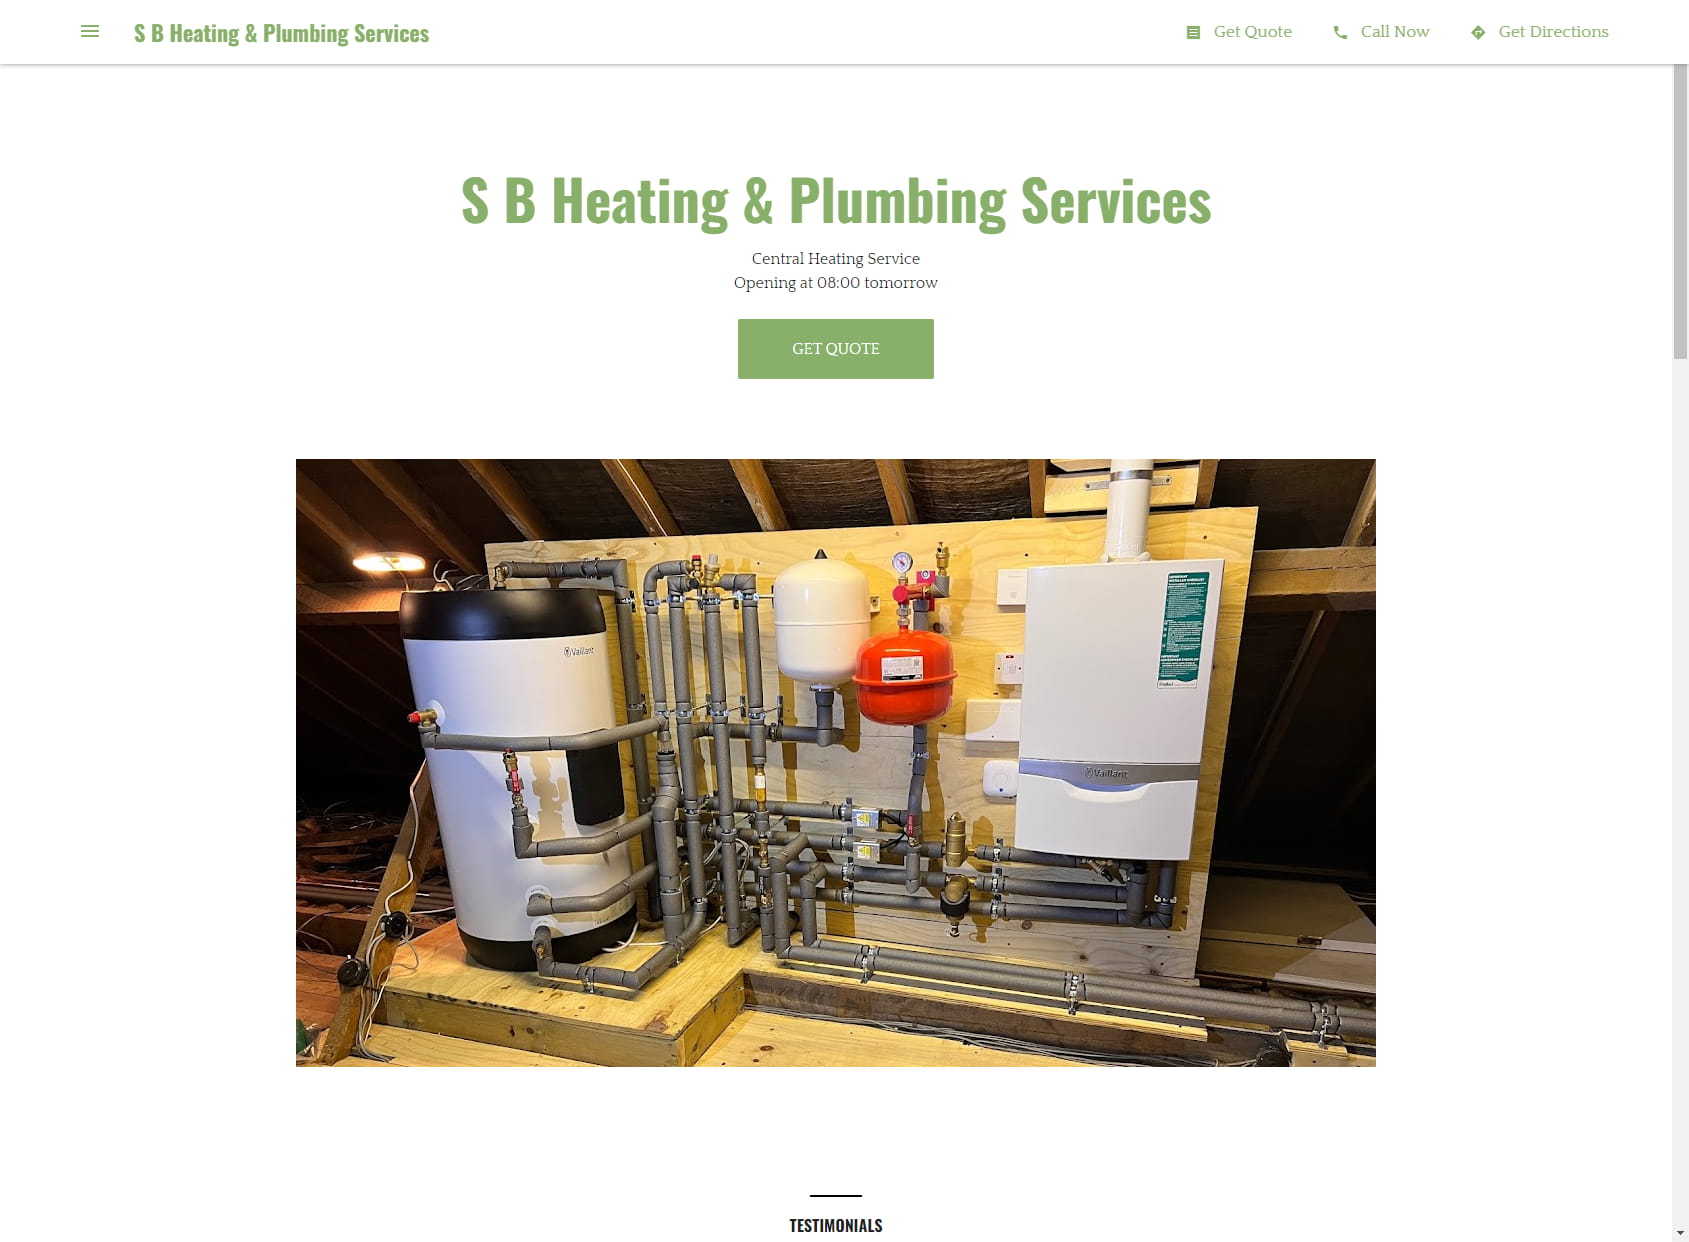 S B Heating & Plumbing Services